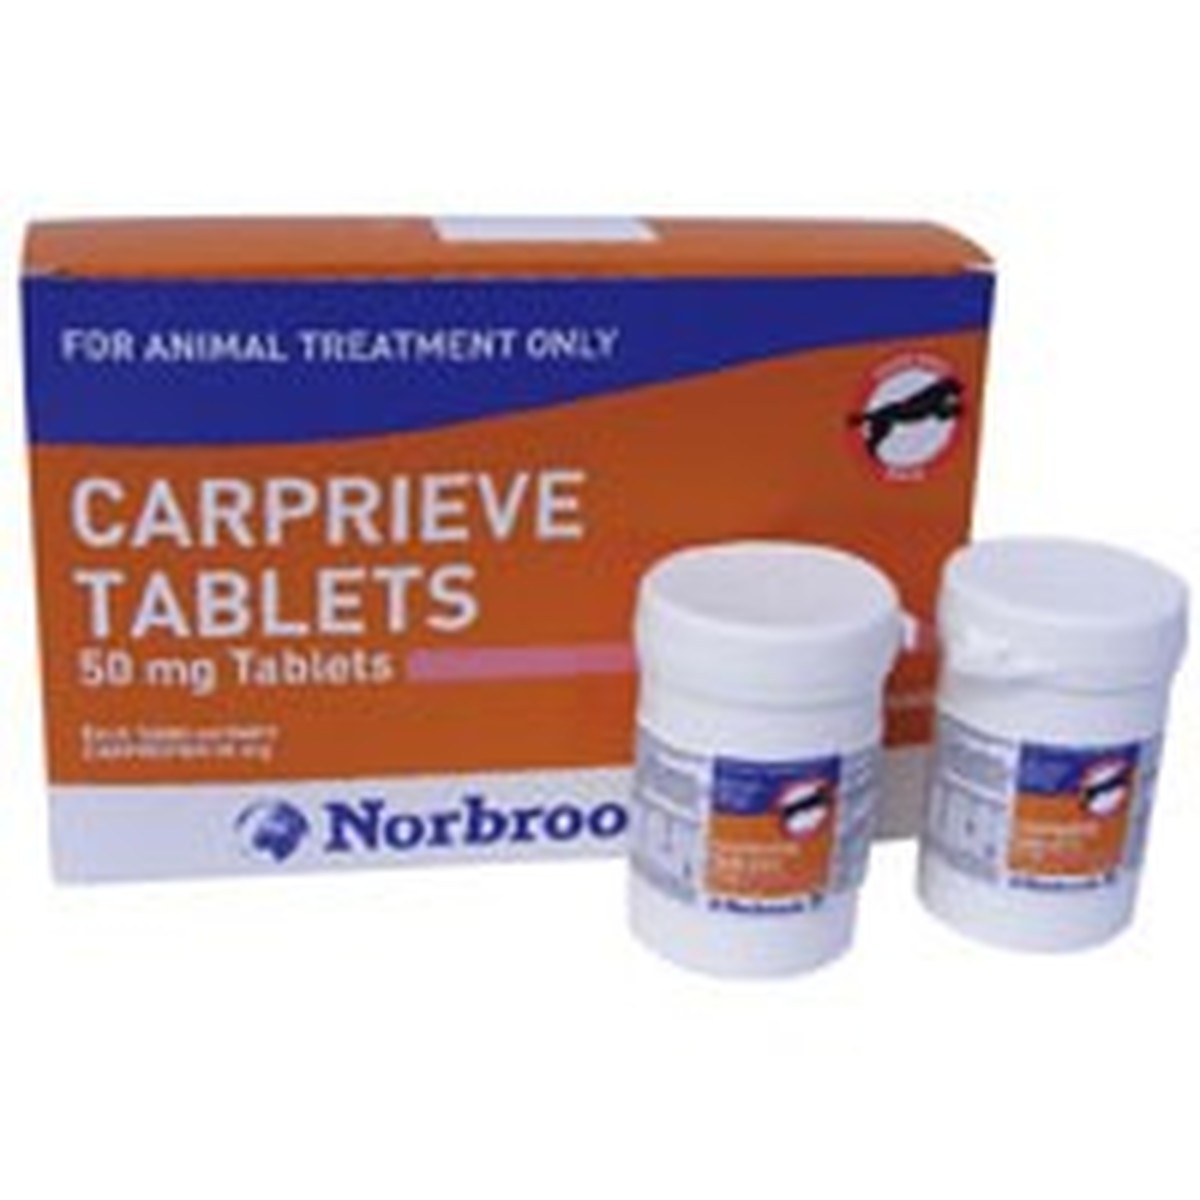 carprieve 50mg tablets for dogs